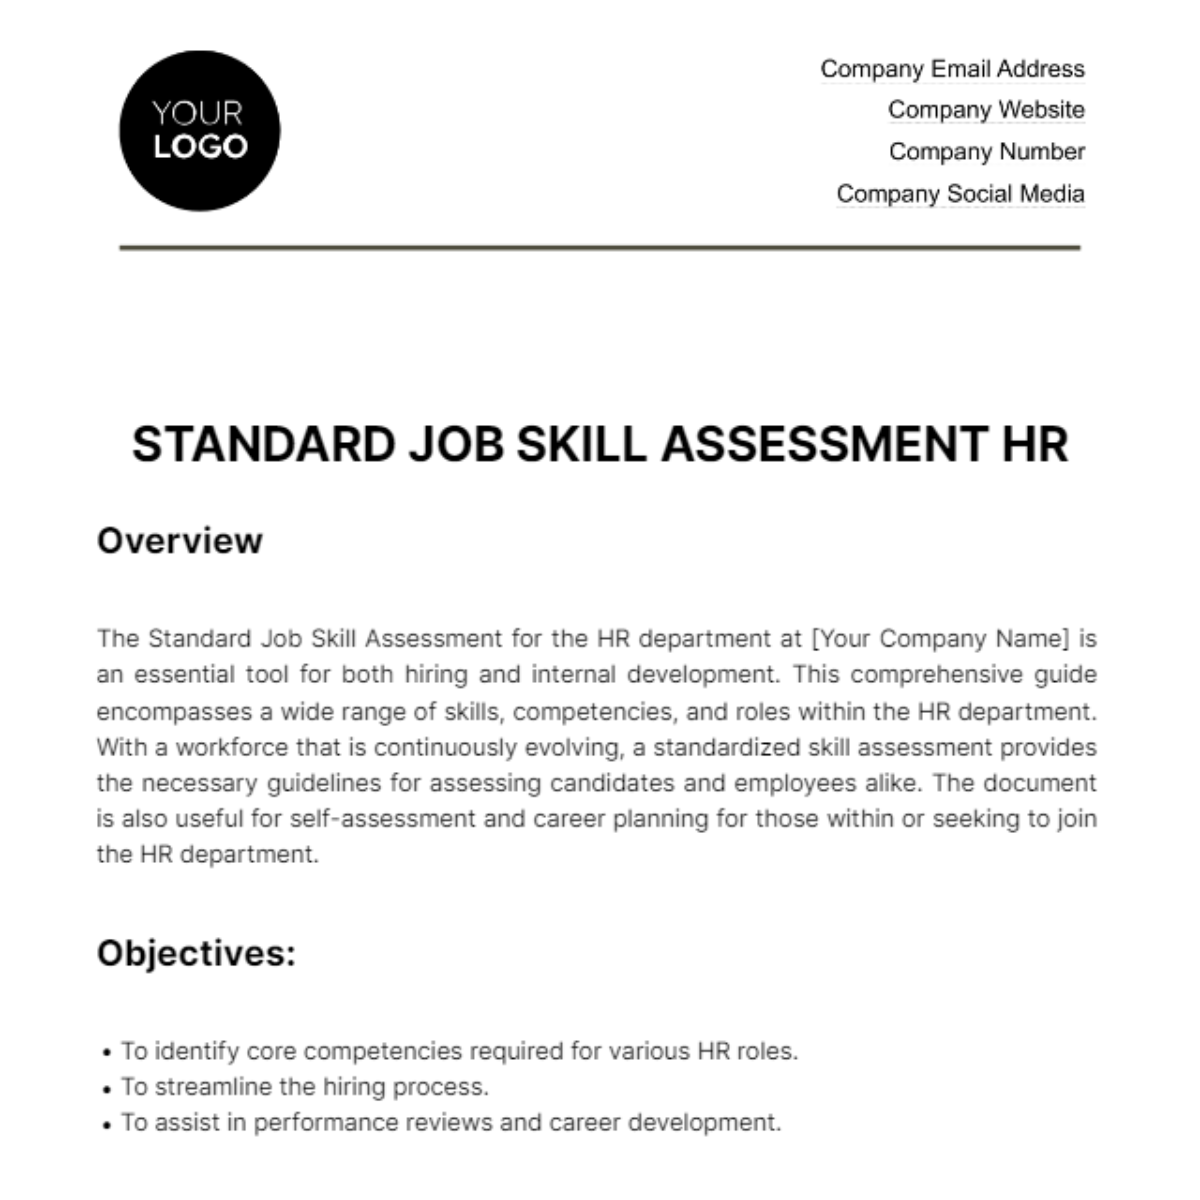 Standard Job Skill Assessment HR Template